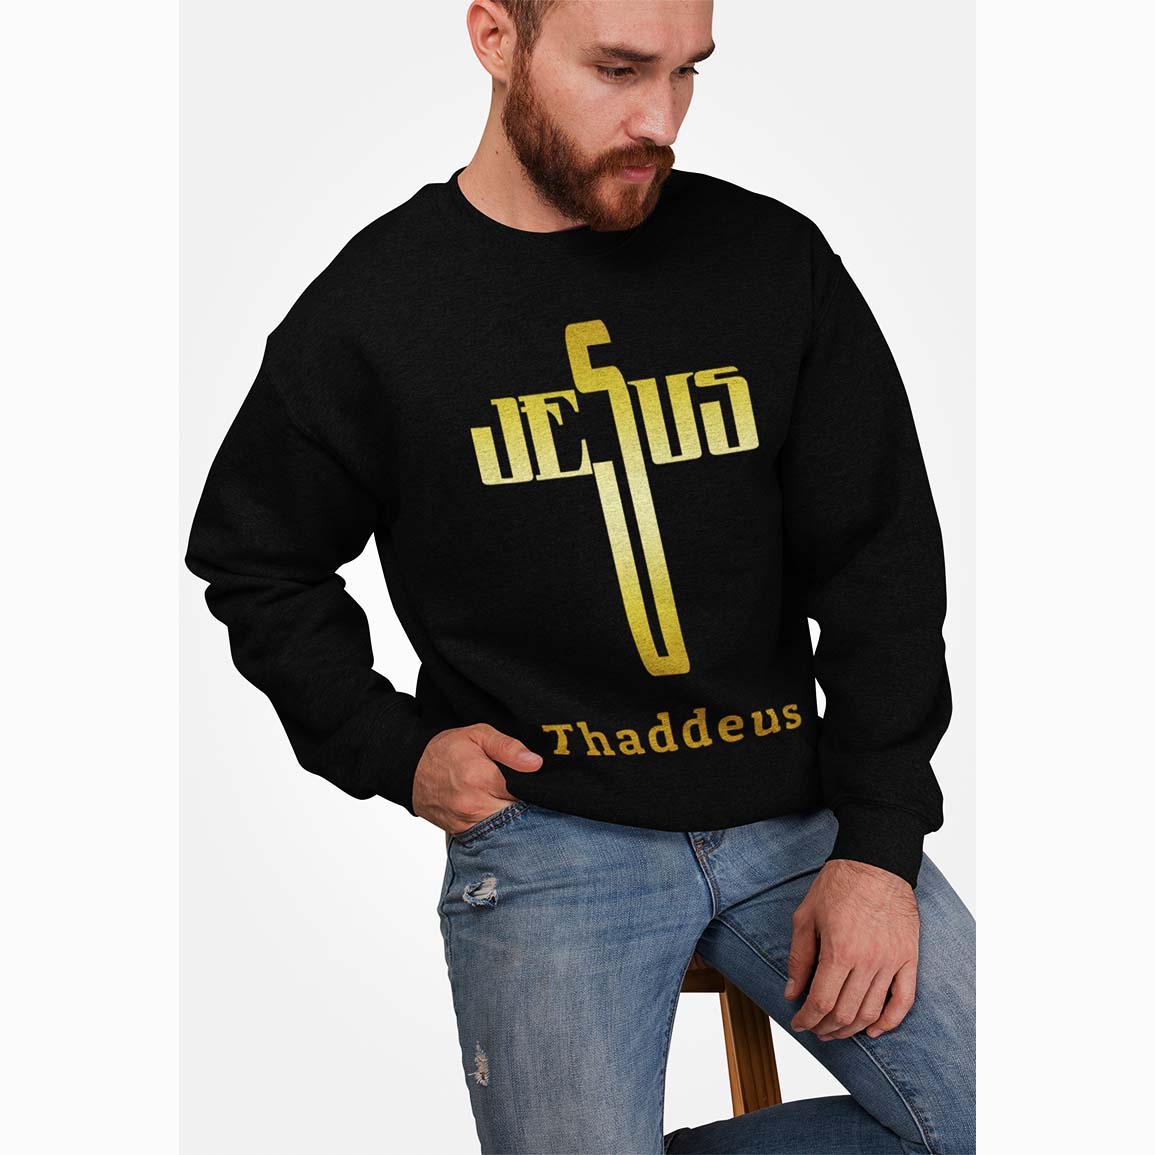 Jesus Personalizable Sweatshirt